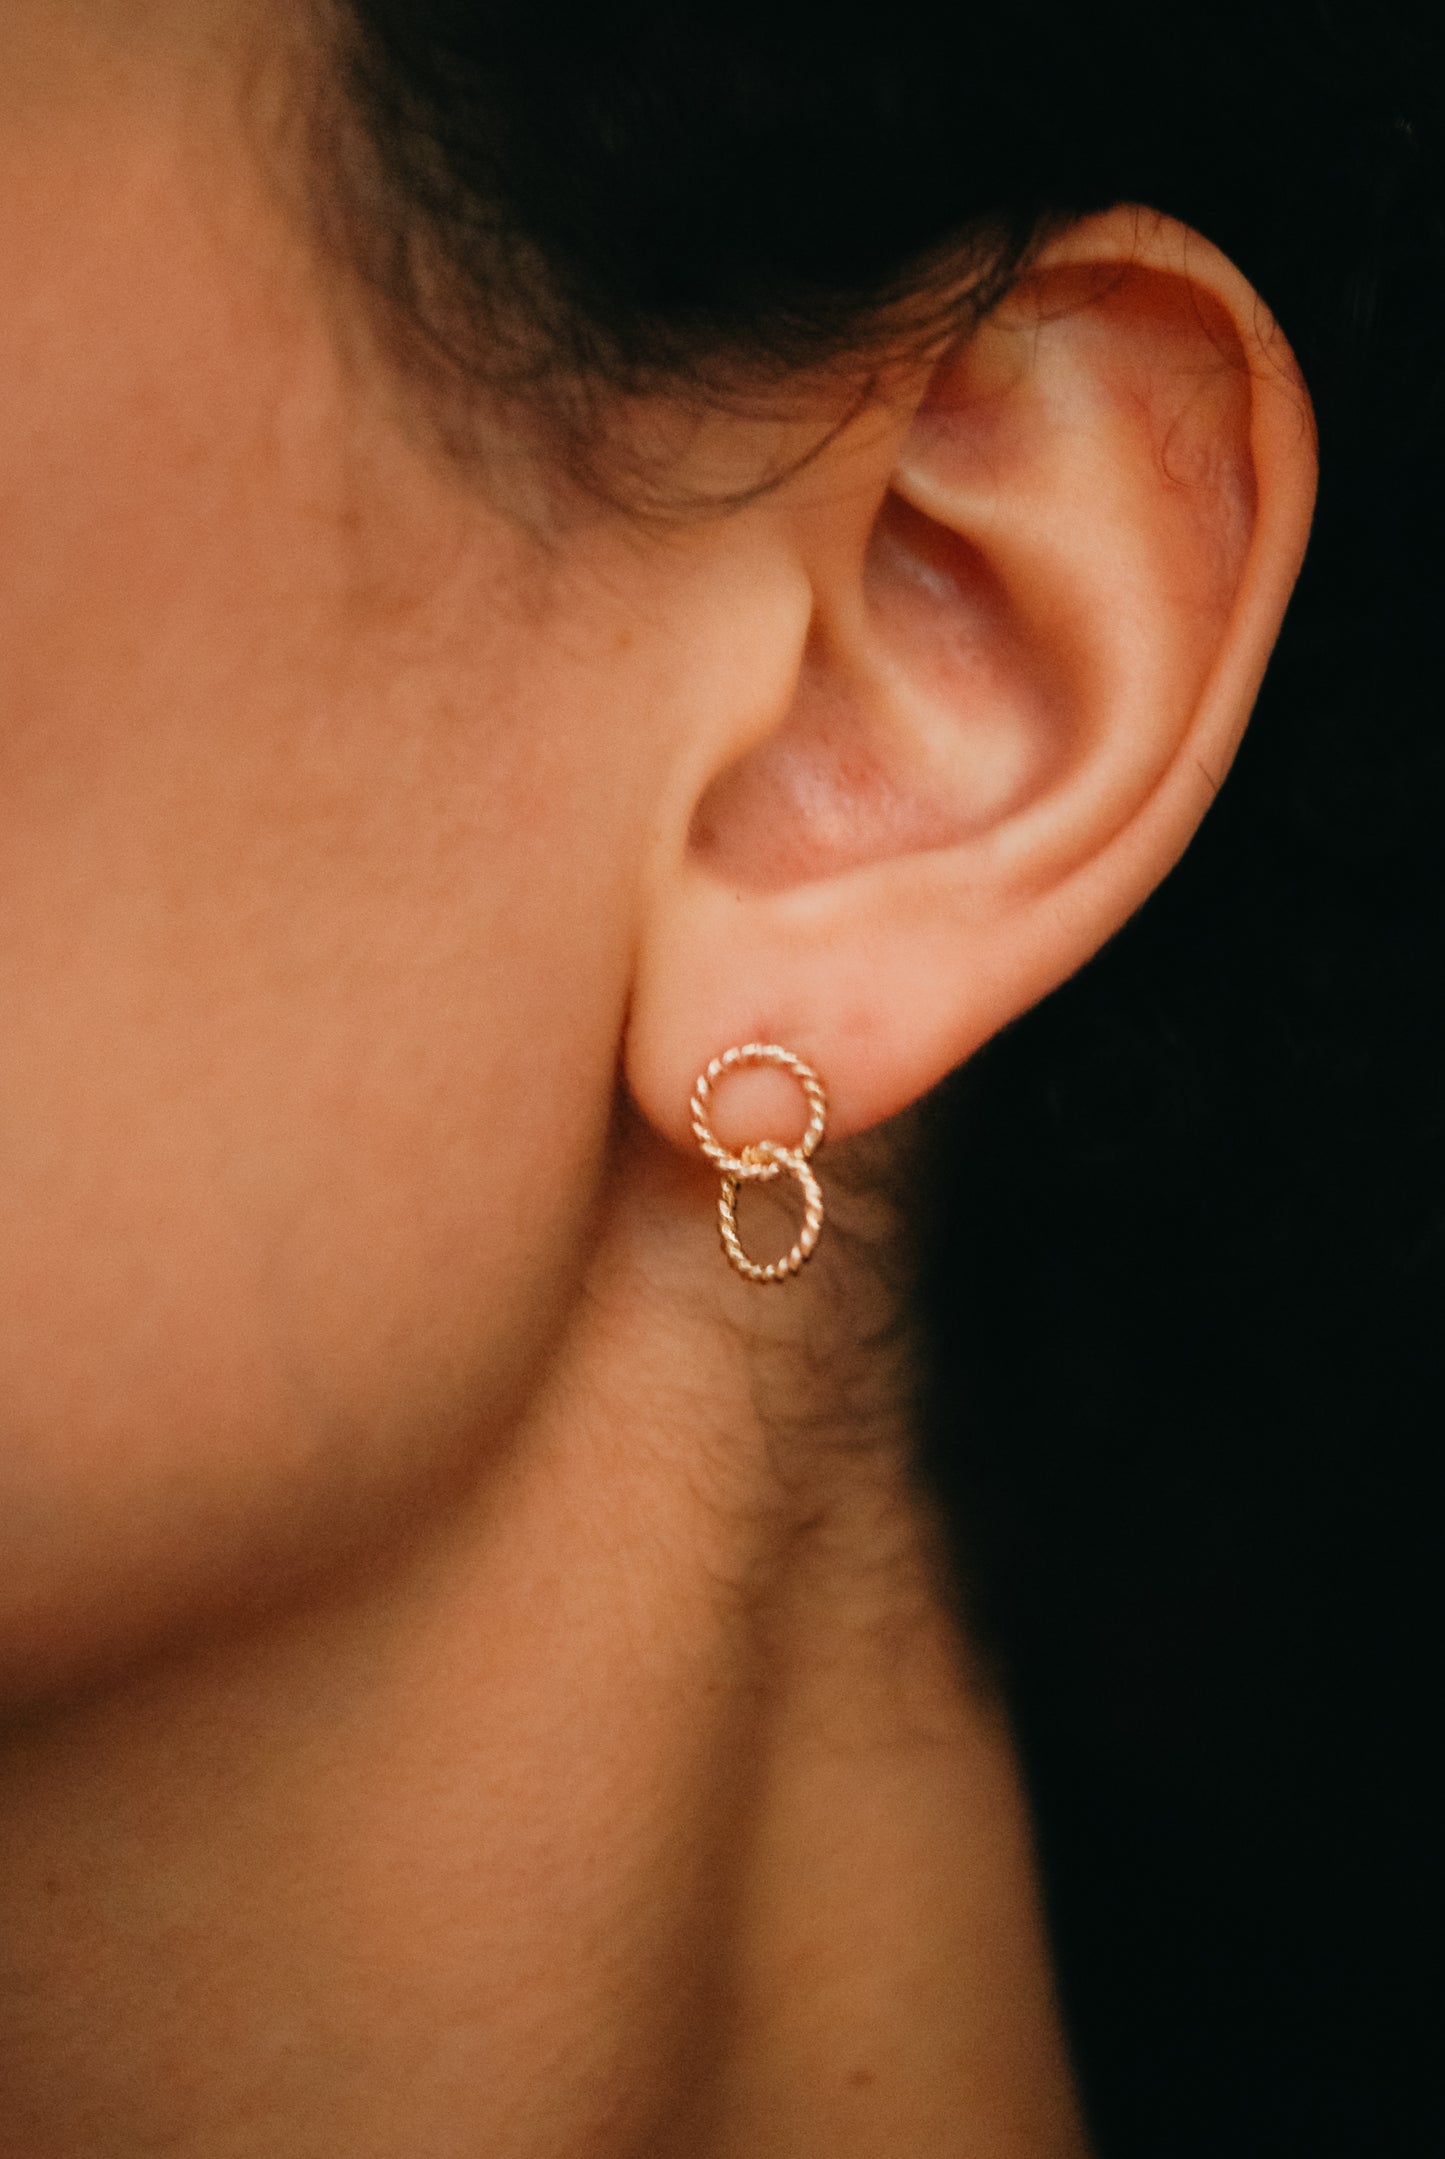 Twist Link Stud Earrings, Gold Fill, Rose Gold Fill, or Sterling Silver